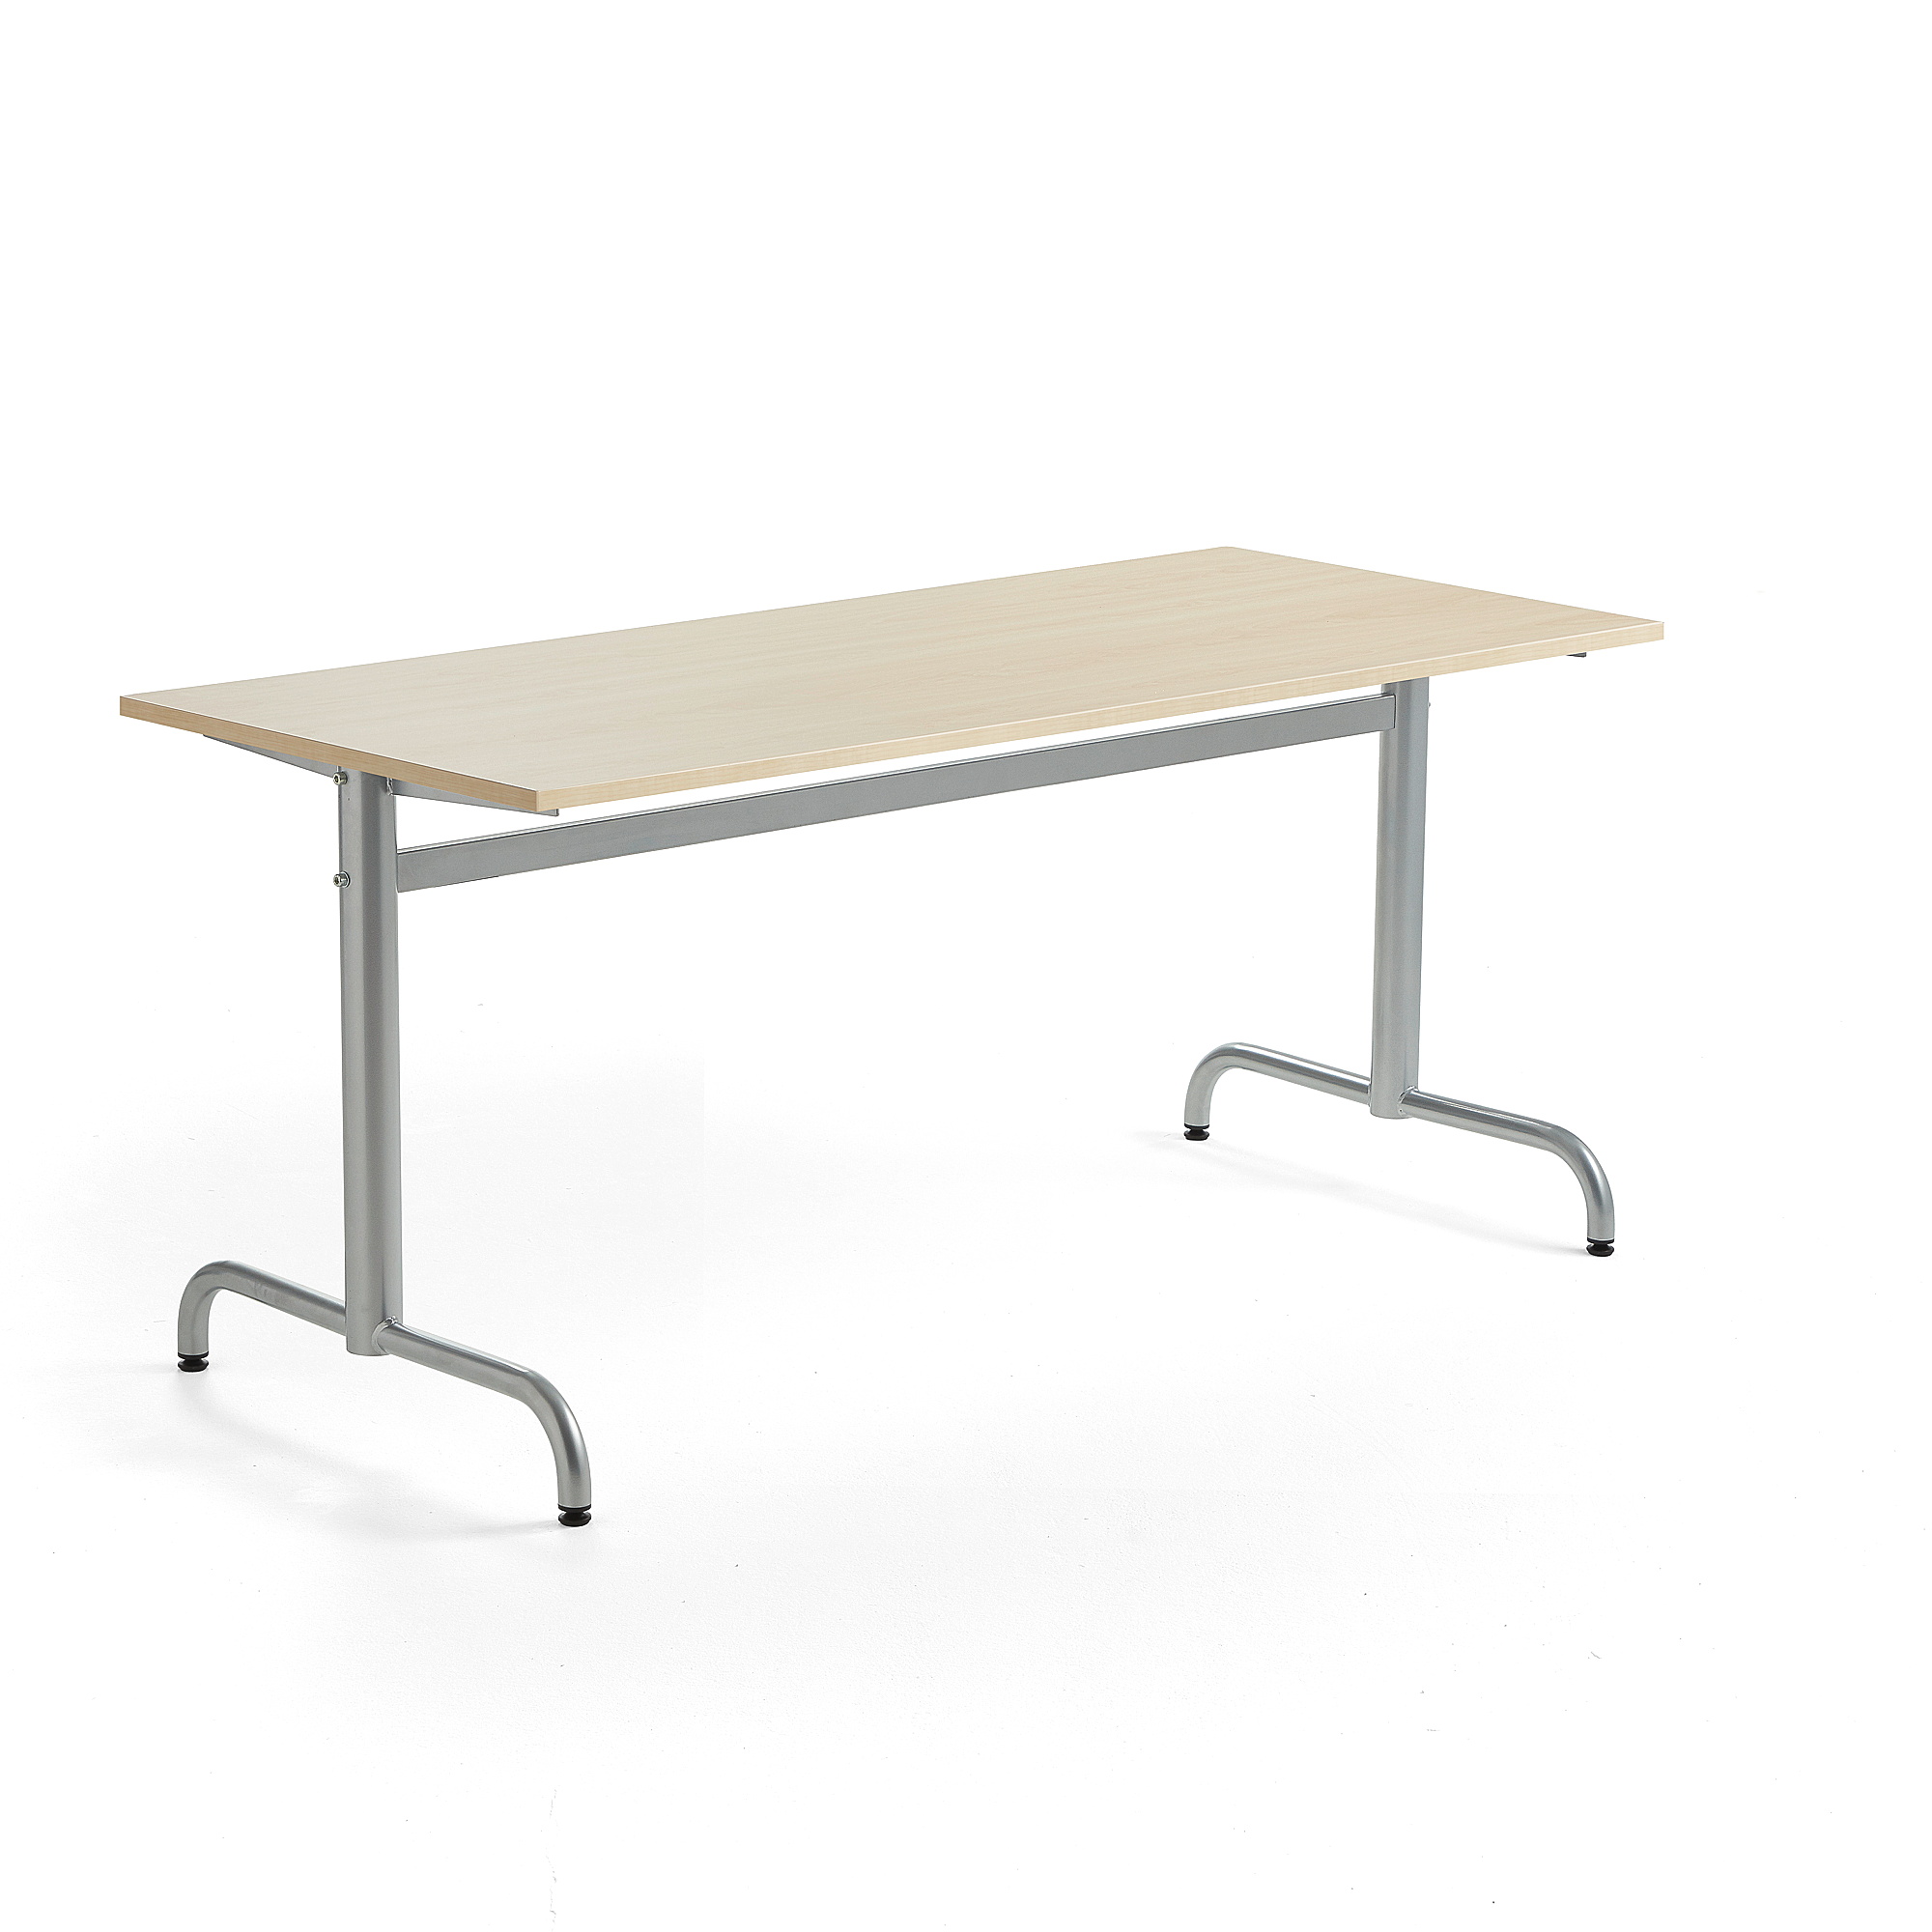 Stůl PLURAL, 1600x700x720 mm, akustická HPL deska, bříza, stříbrná